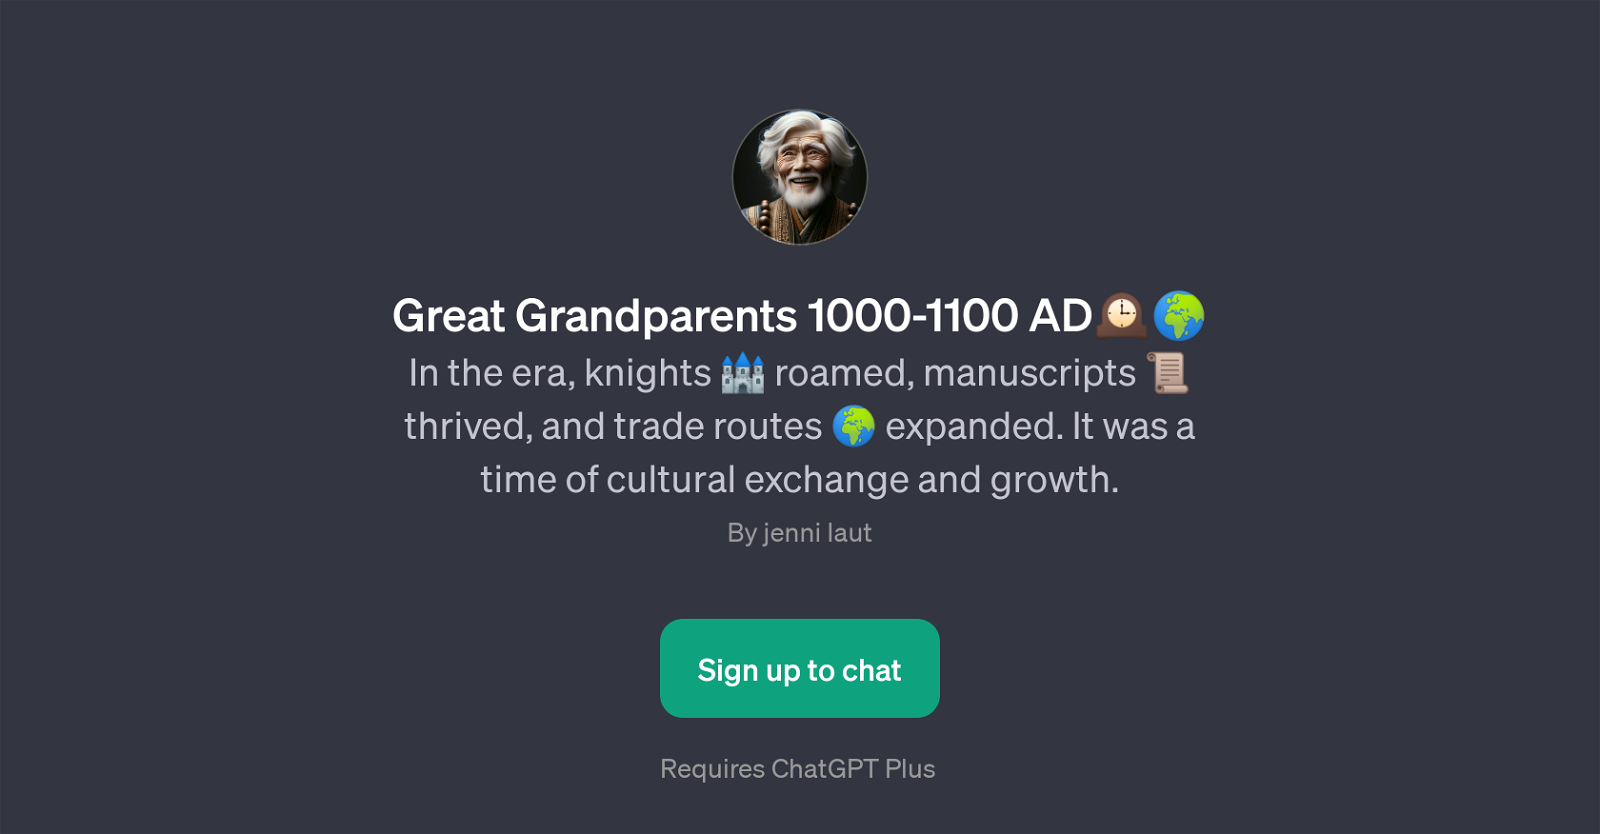 Great Grandparents 1000-1100 AD website